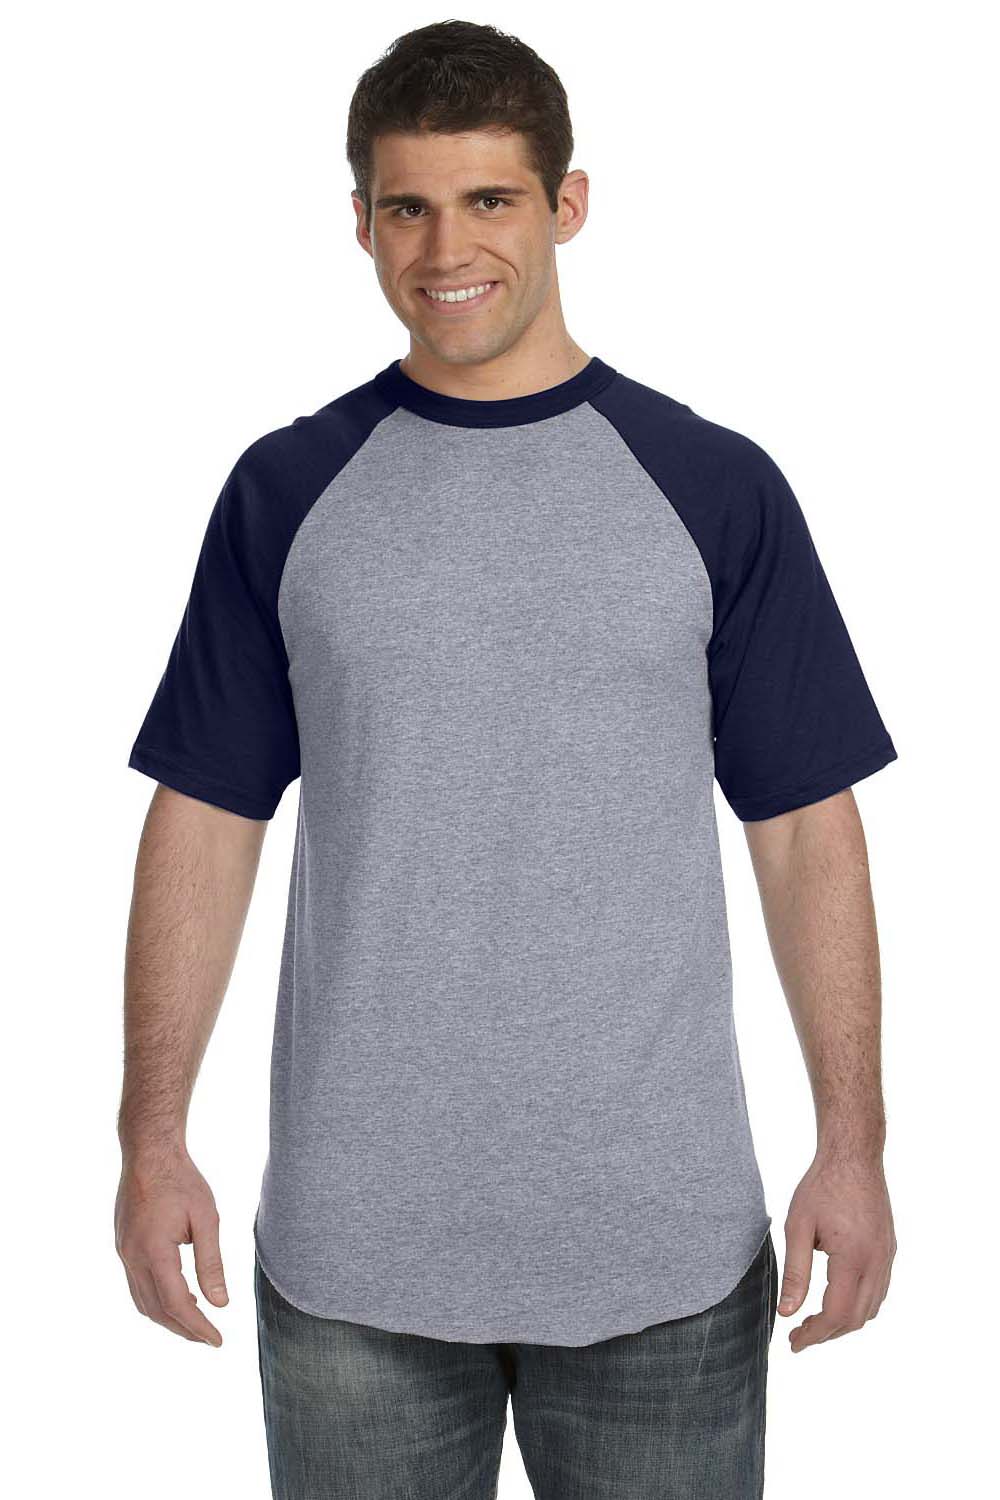 Augusta Sportswear 423 Mens Short Sleeve Crewneck T-Shirt Heather Grey/Navy Blue Model Front